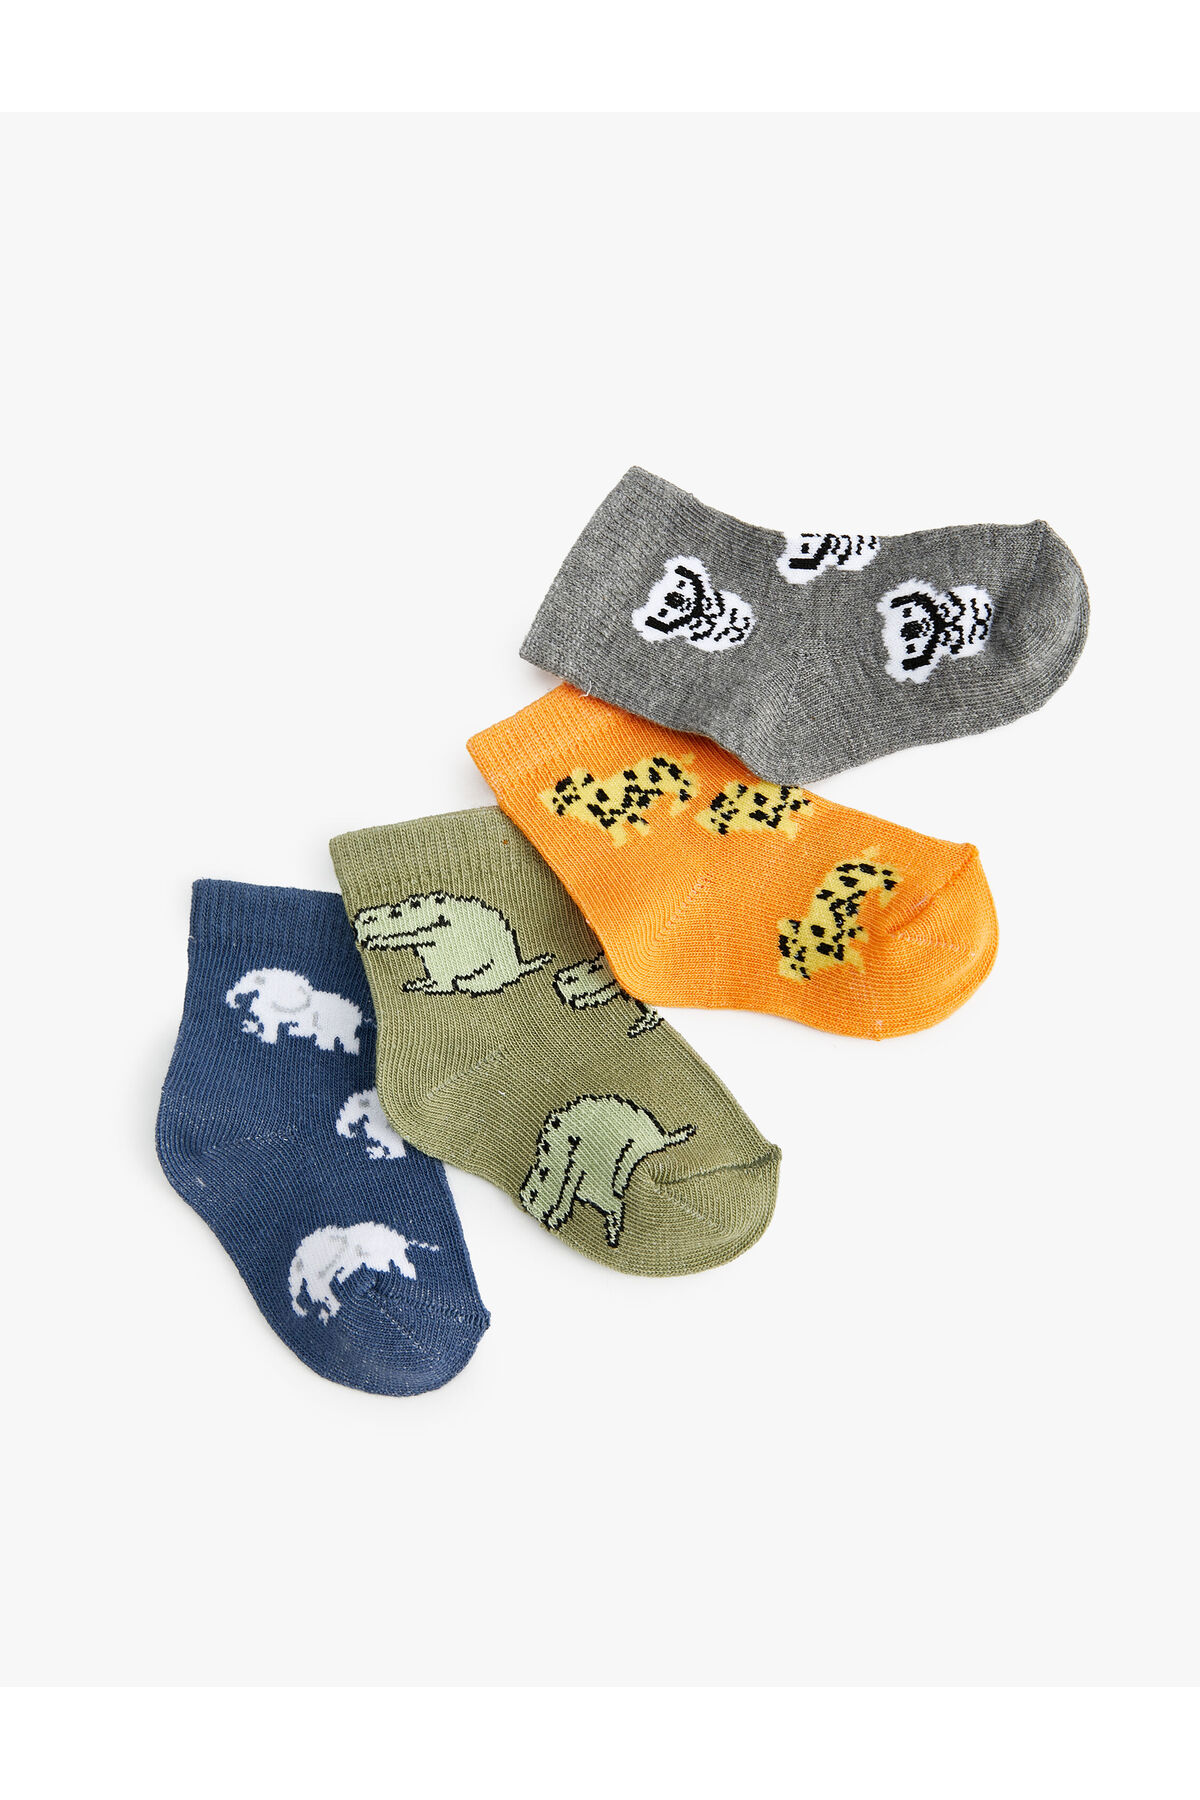 Koton Set of 4 Socks Multicolored Animal Pattern Cotton